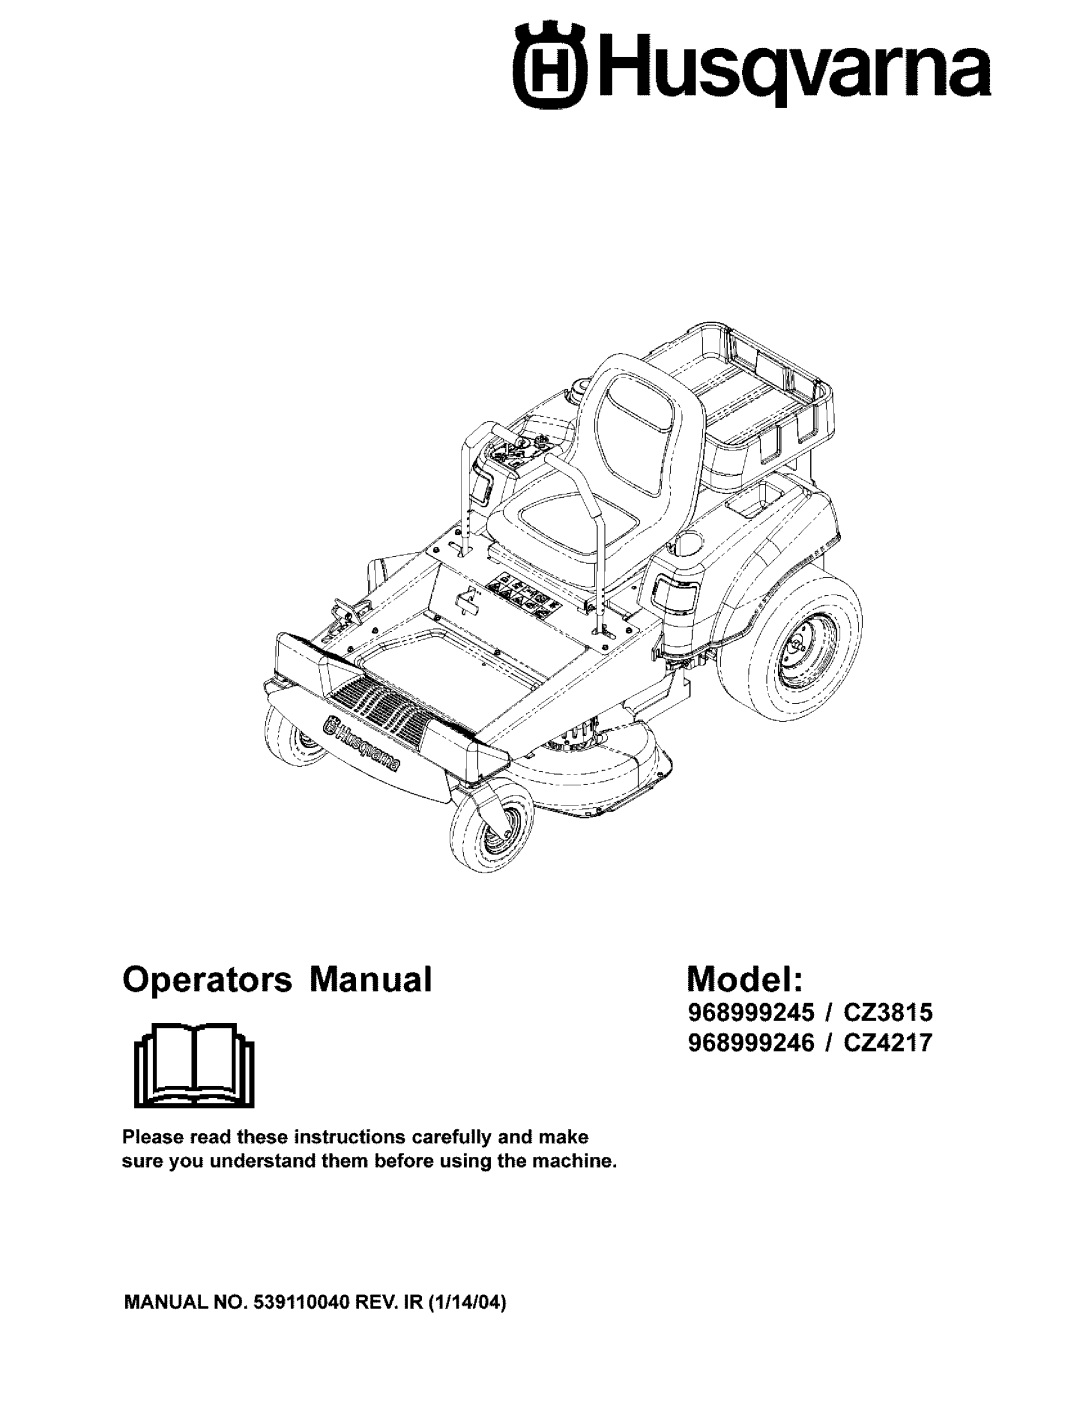 Husqvarna manual Husqvarna, 968999245/ CZ3815 968999246/CZ4217, Operators Manual, Model 